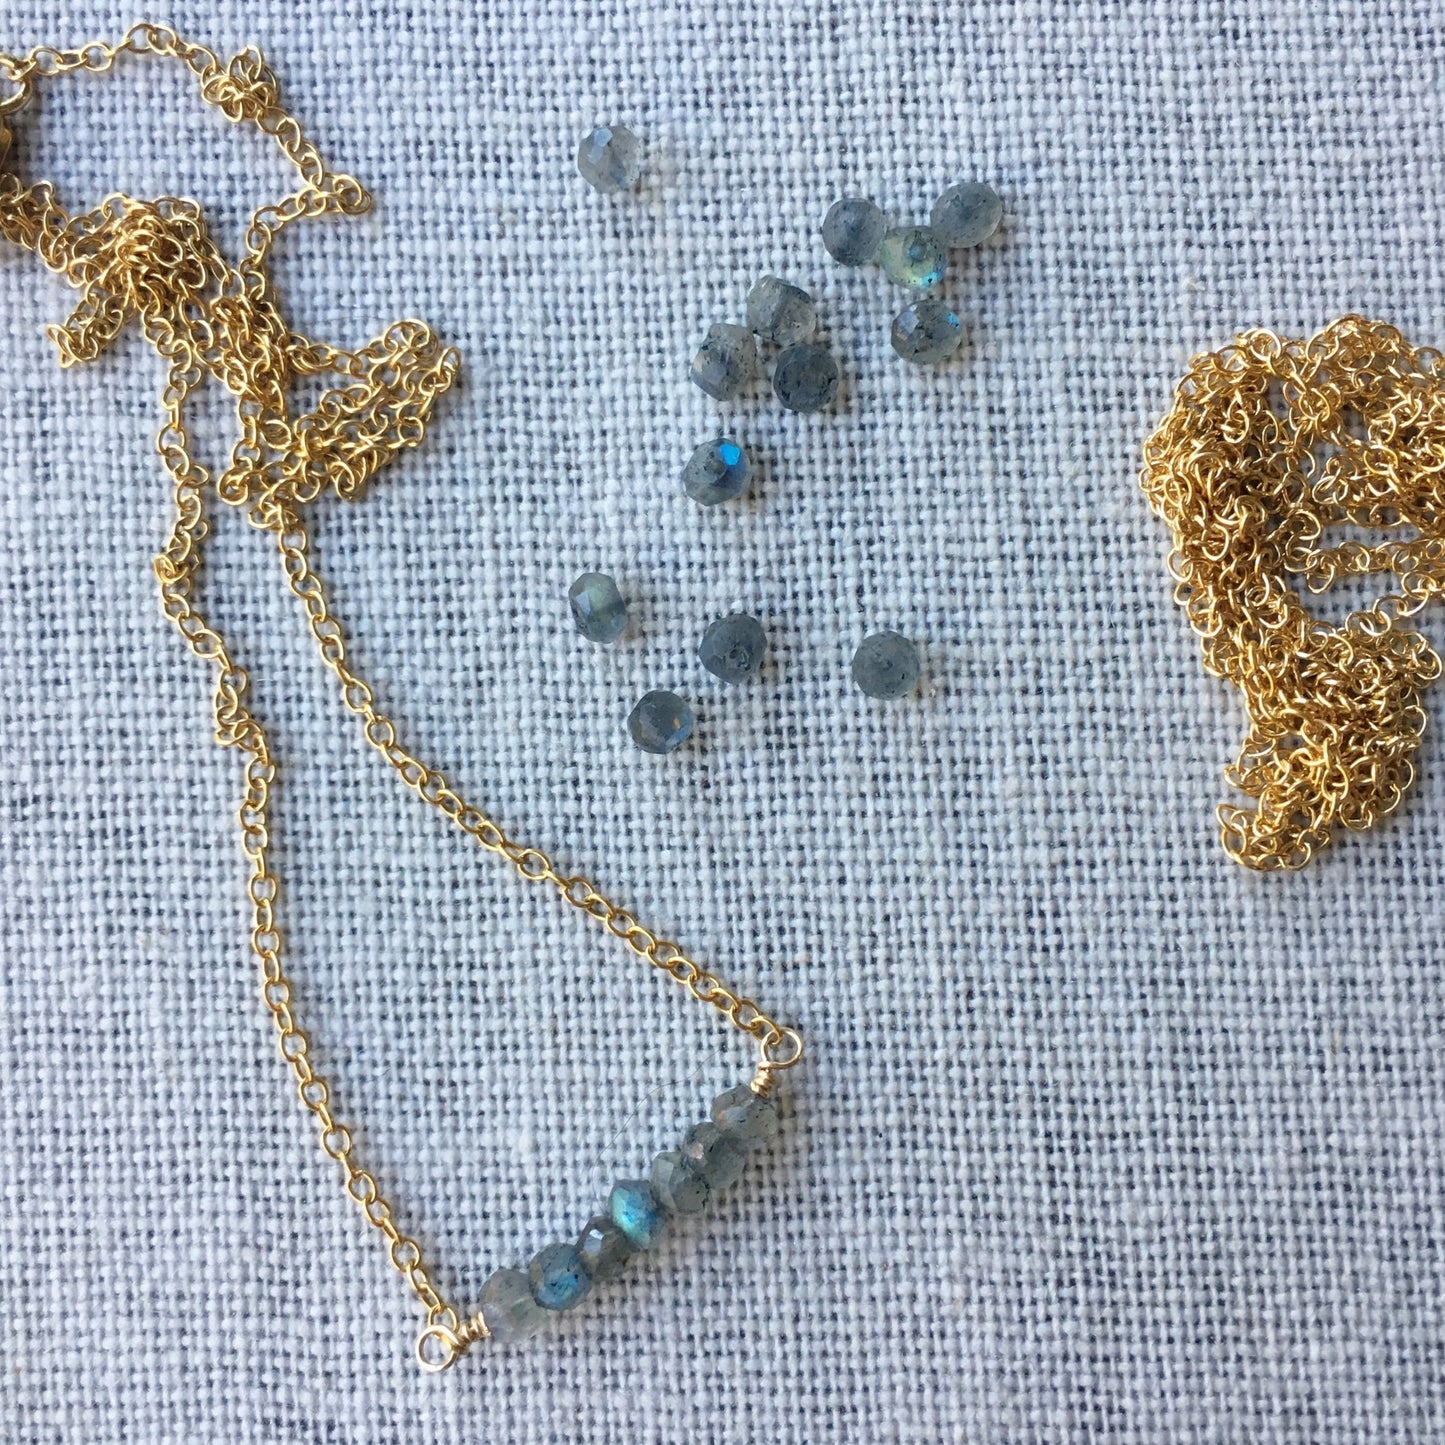 Labradorite and Gold Gemstone Necklace by Wallis Designs